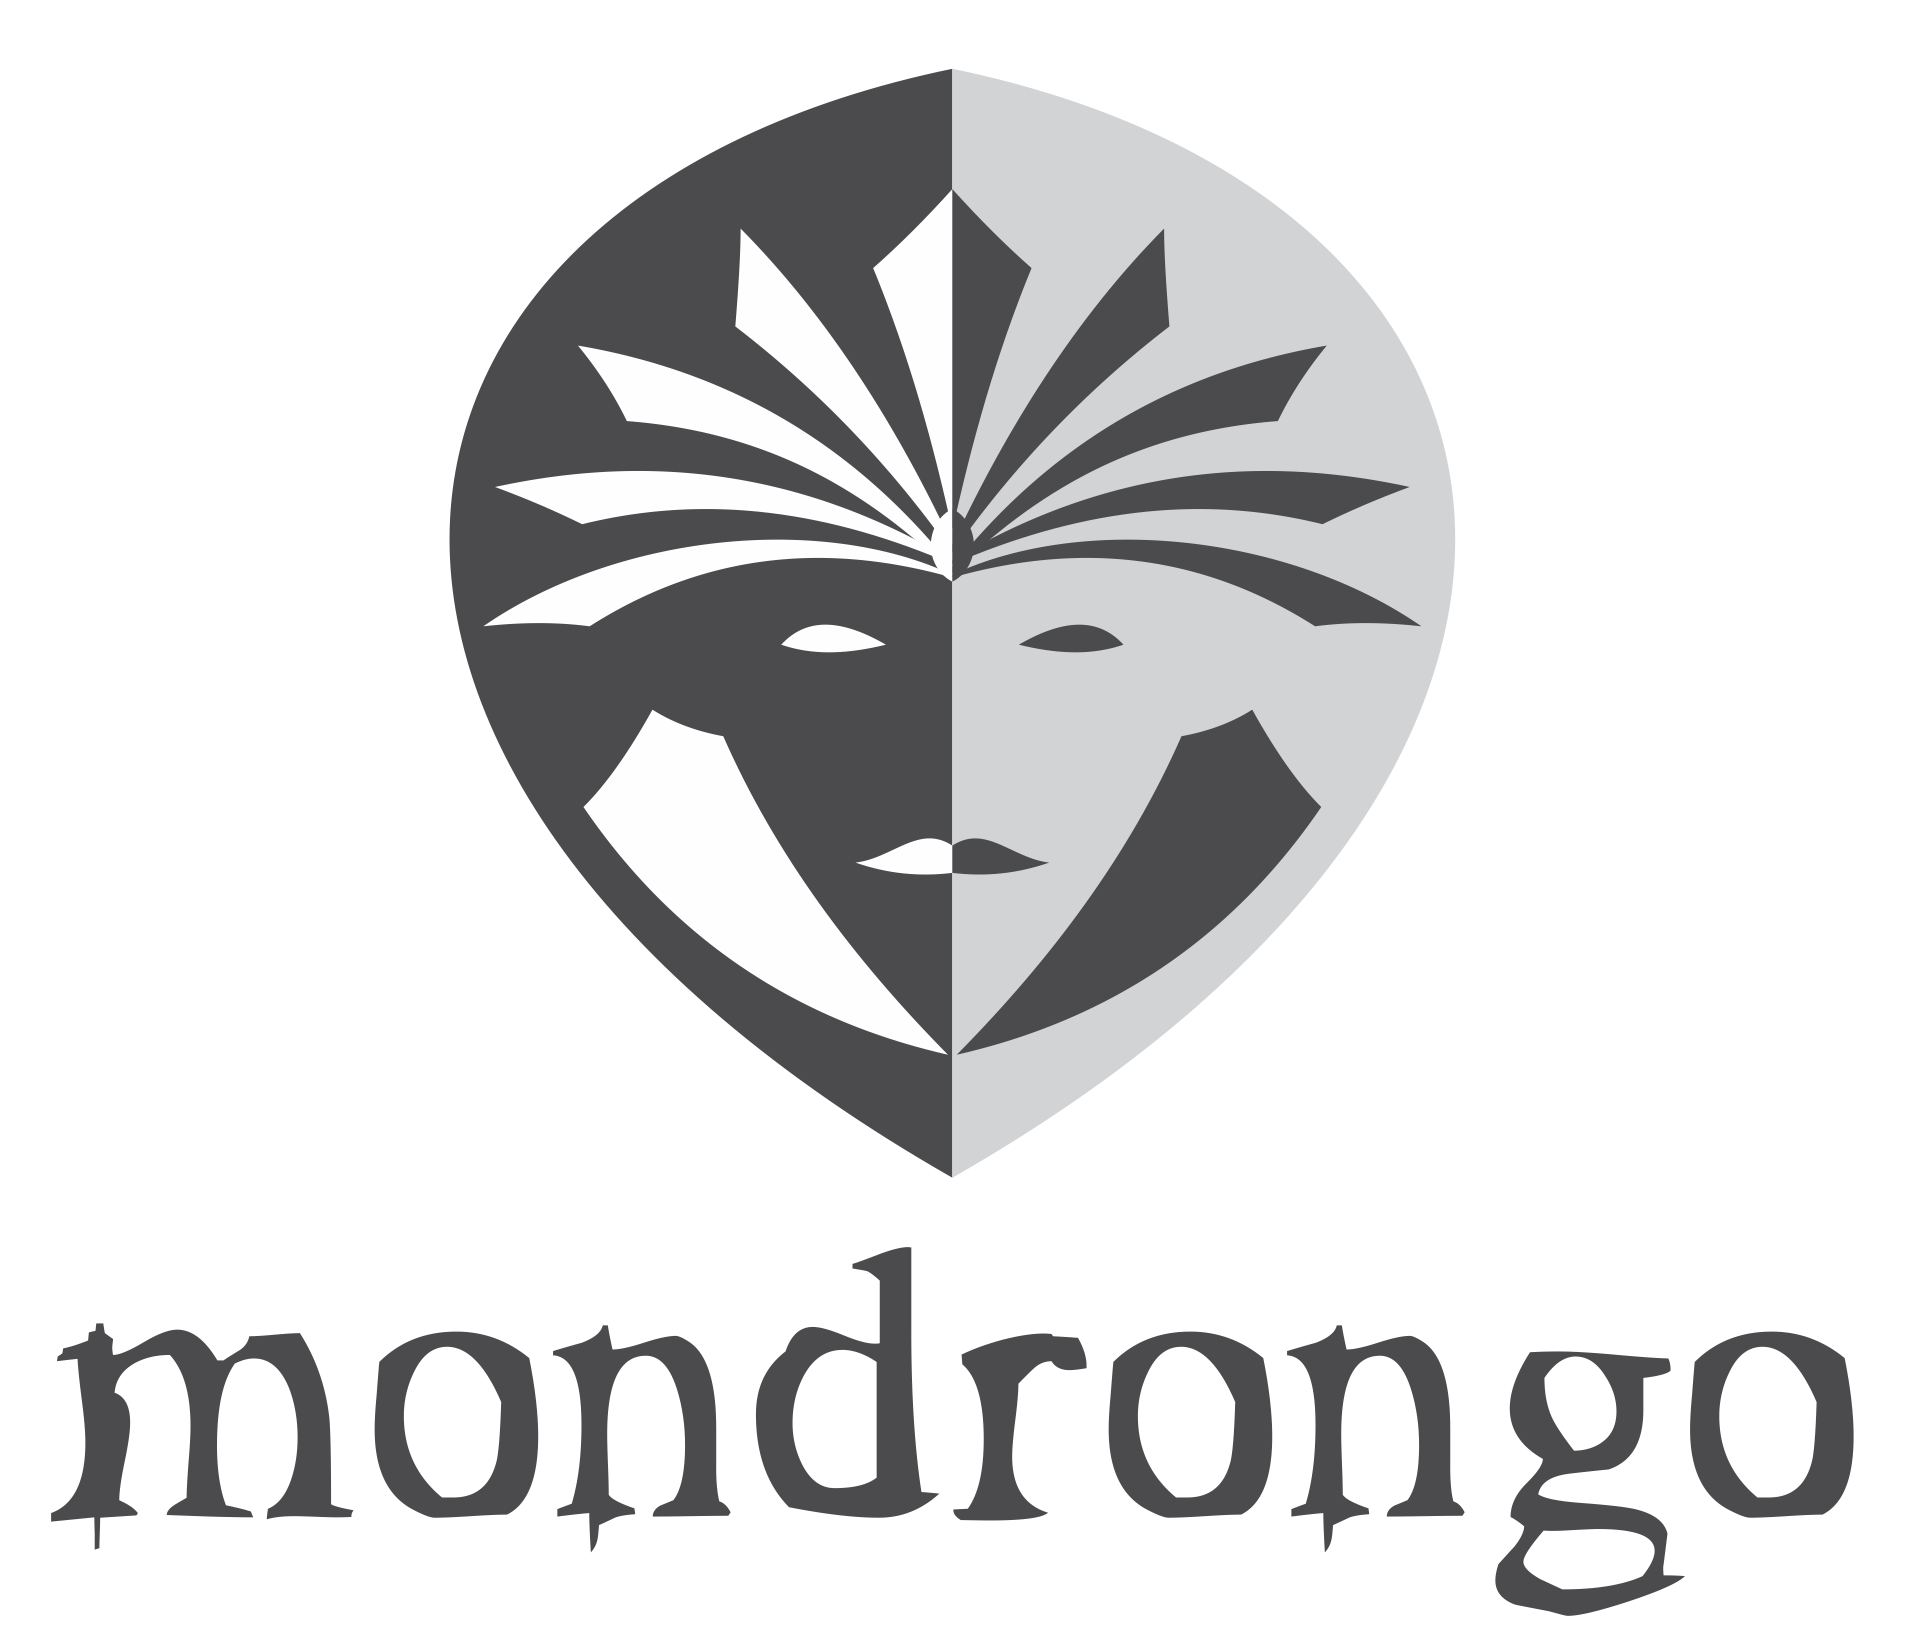 O Mercado Literário das Editoras Independentes | Editora Mondrongo